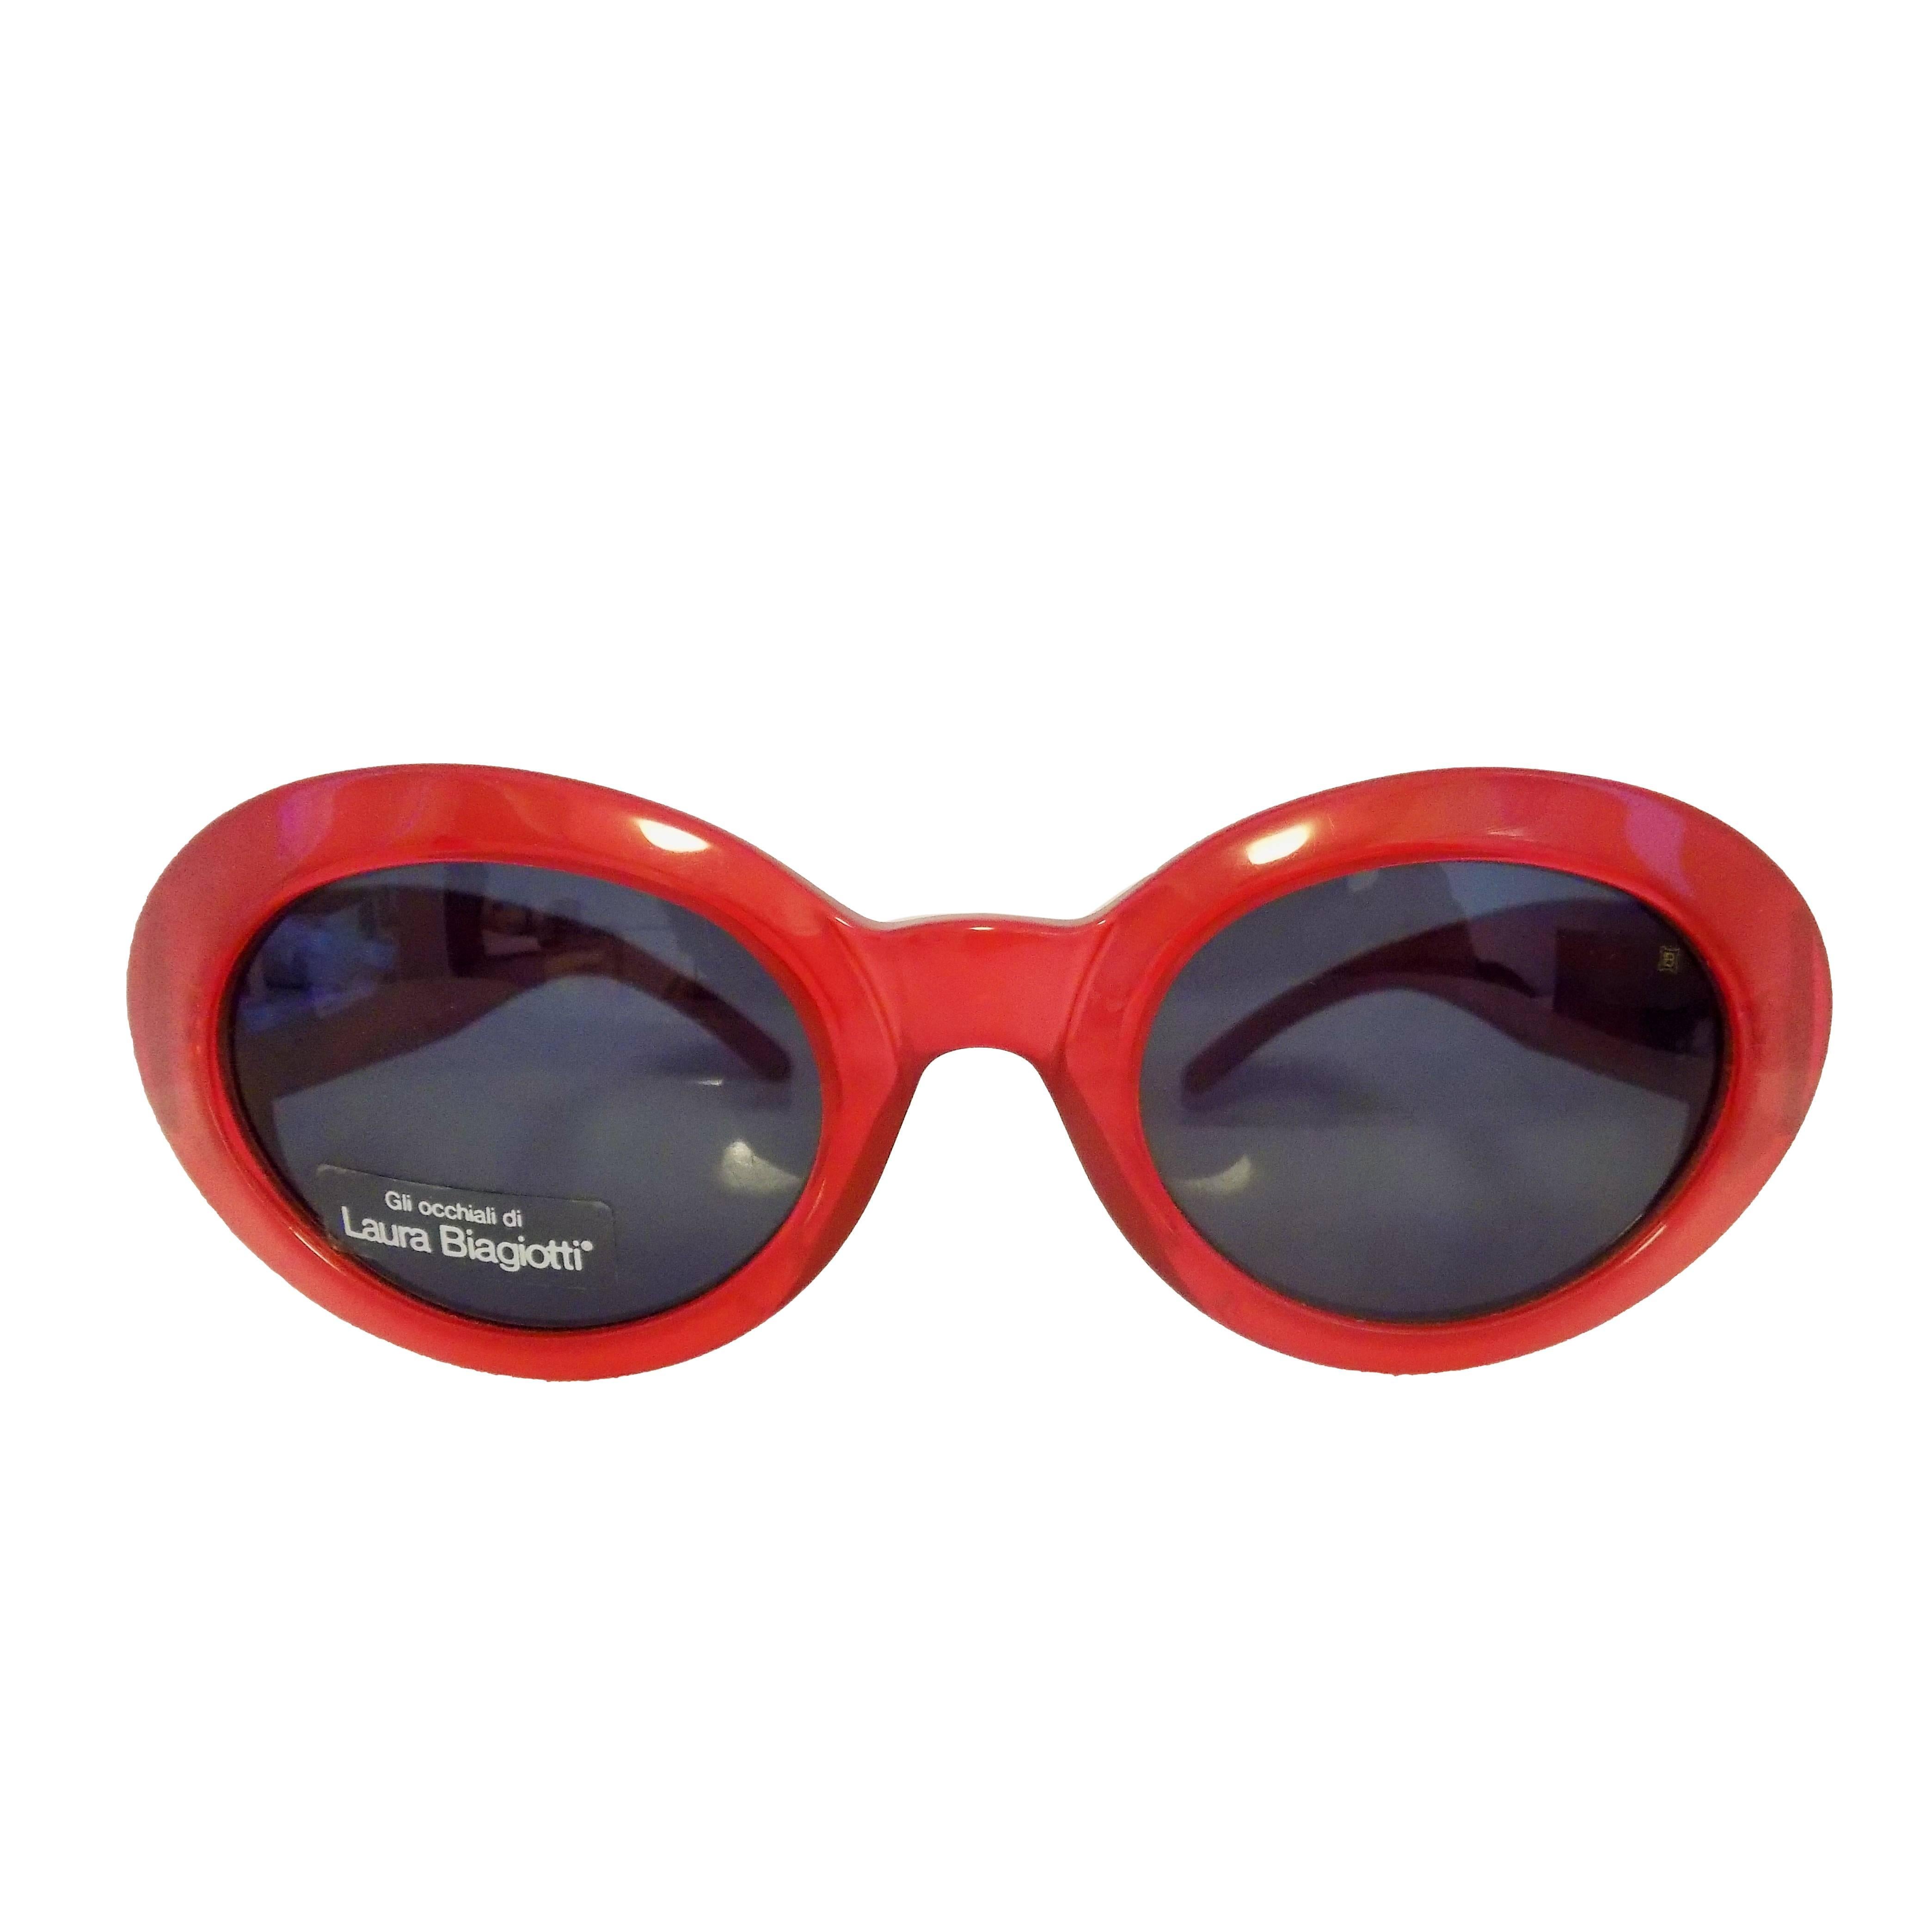 1980s Laura Biagiotti red sunglasses